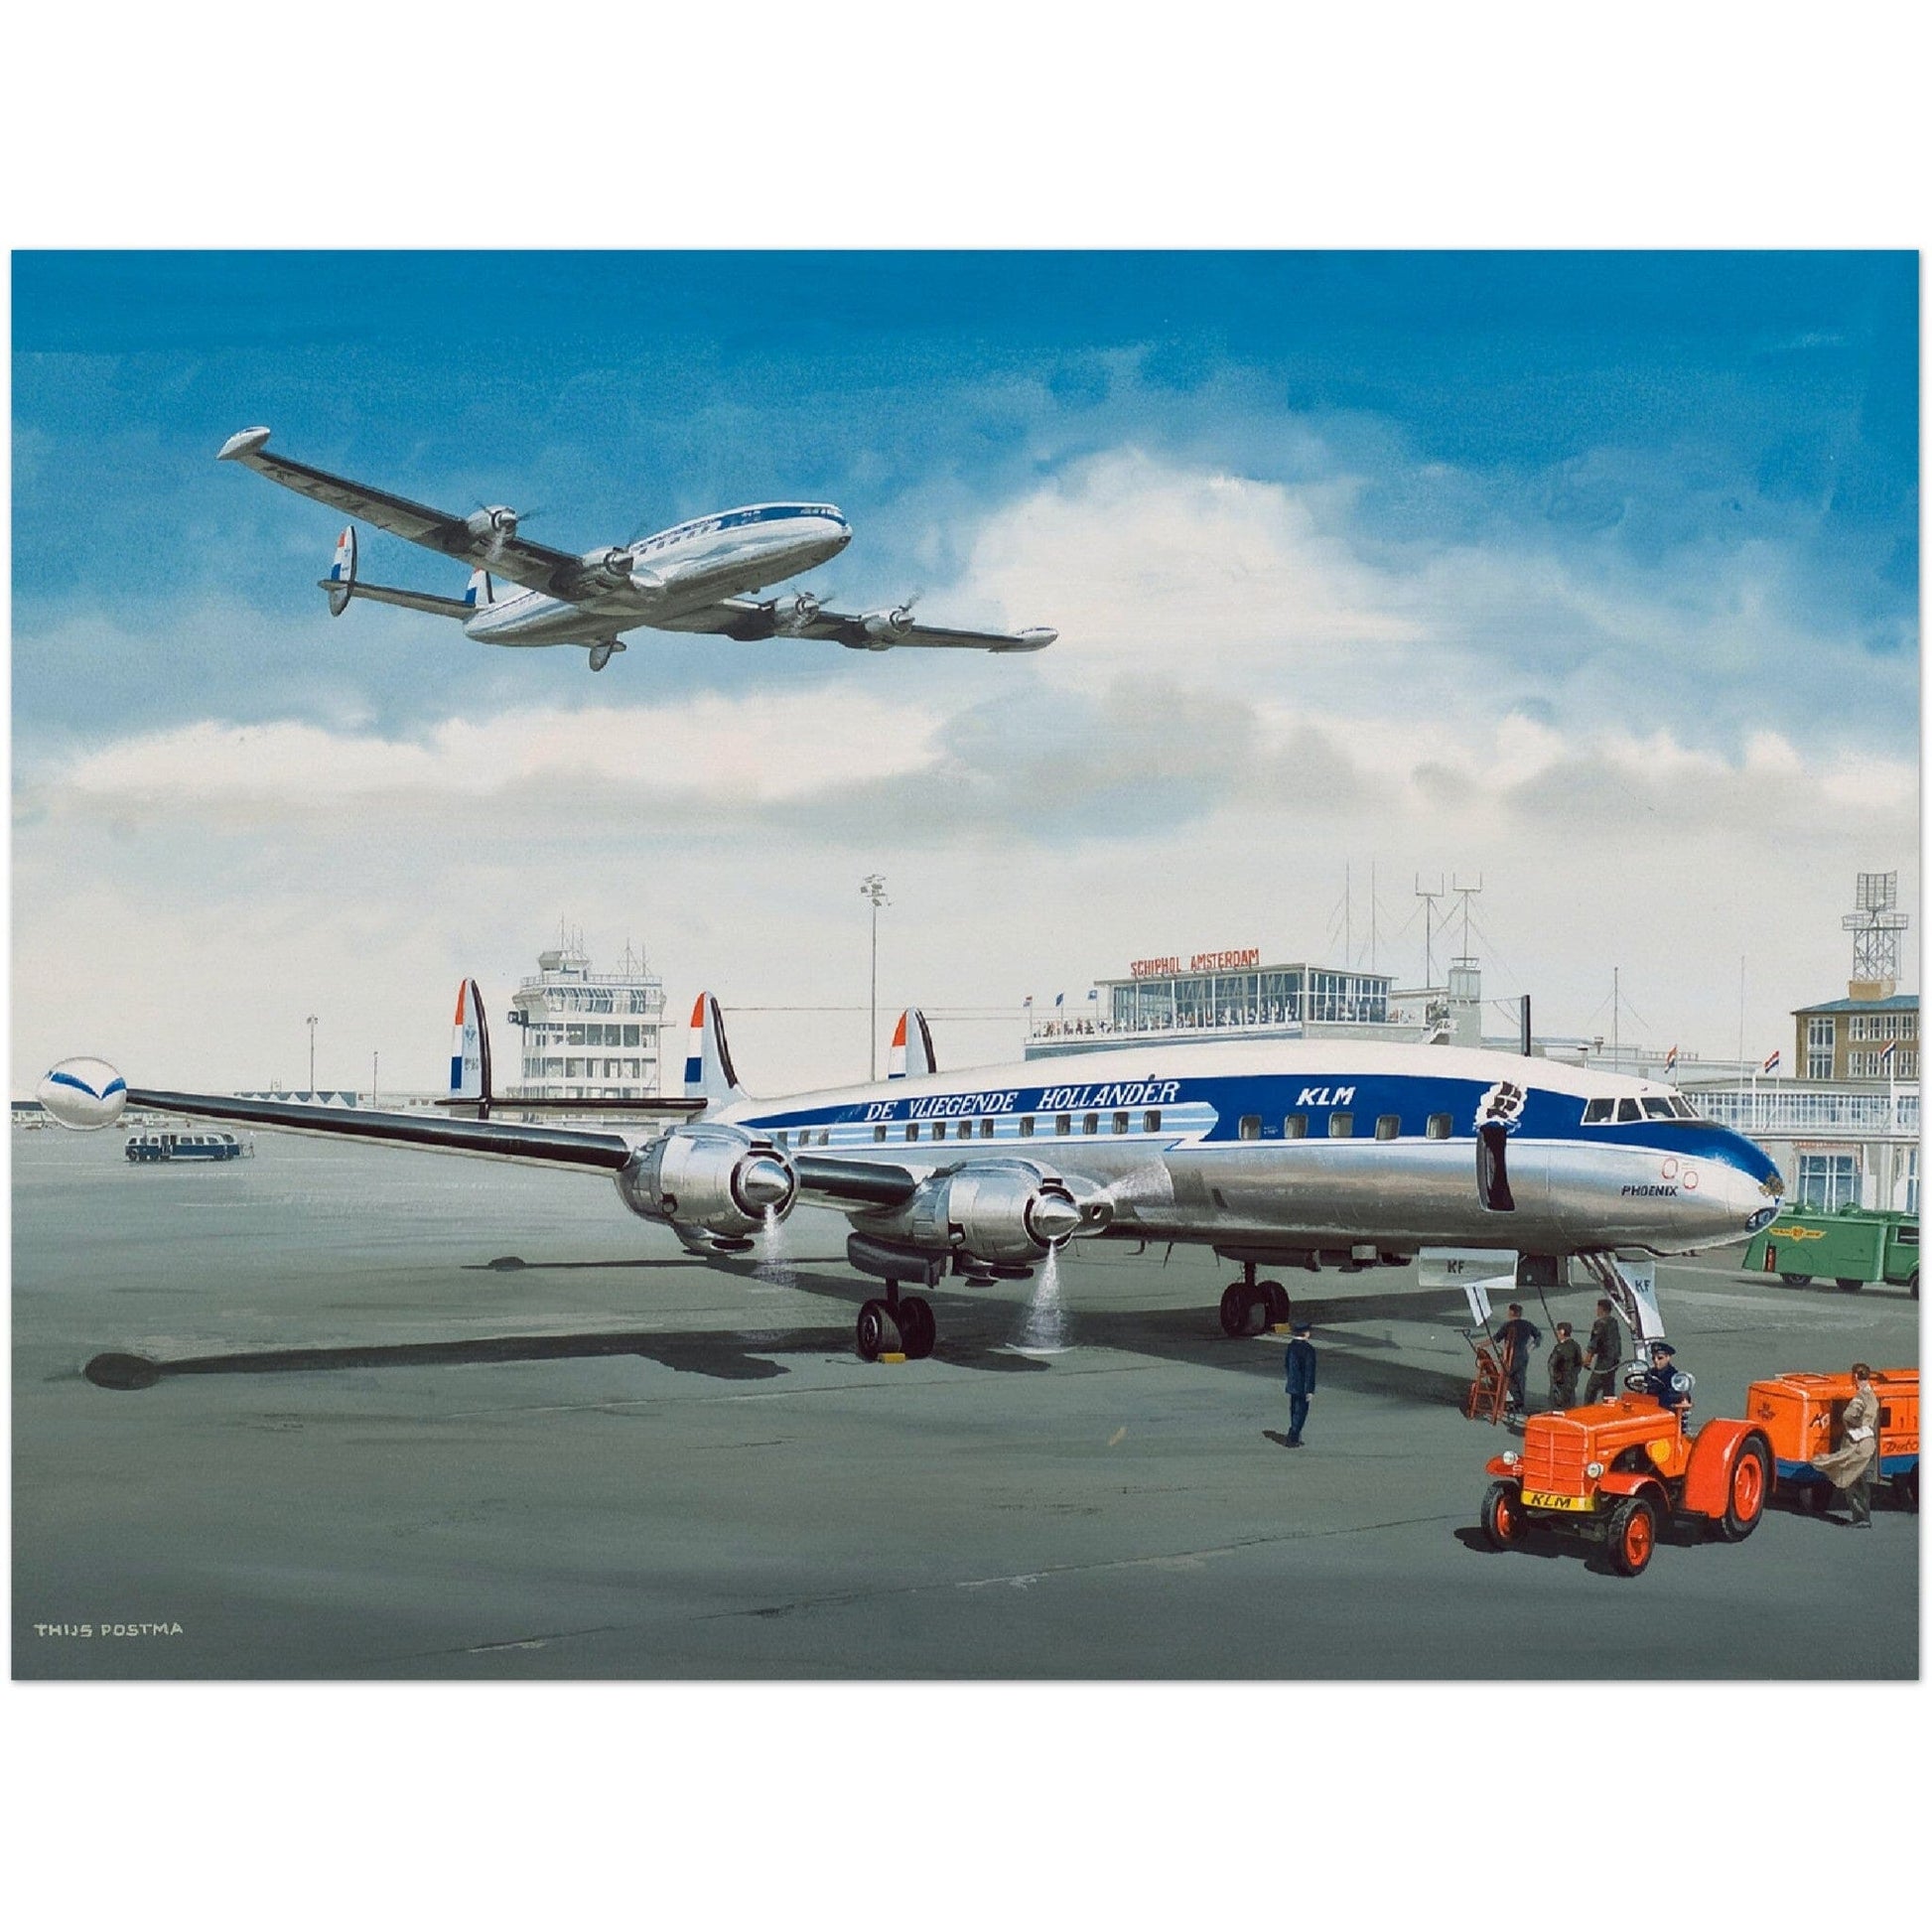 Thijs Postma - Poster - Lockheed L-1049 PH-LKF Phoenix Poster Only TP Aviation Art 45x60 cm / 18x24″ 